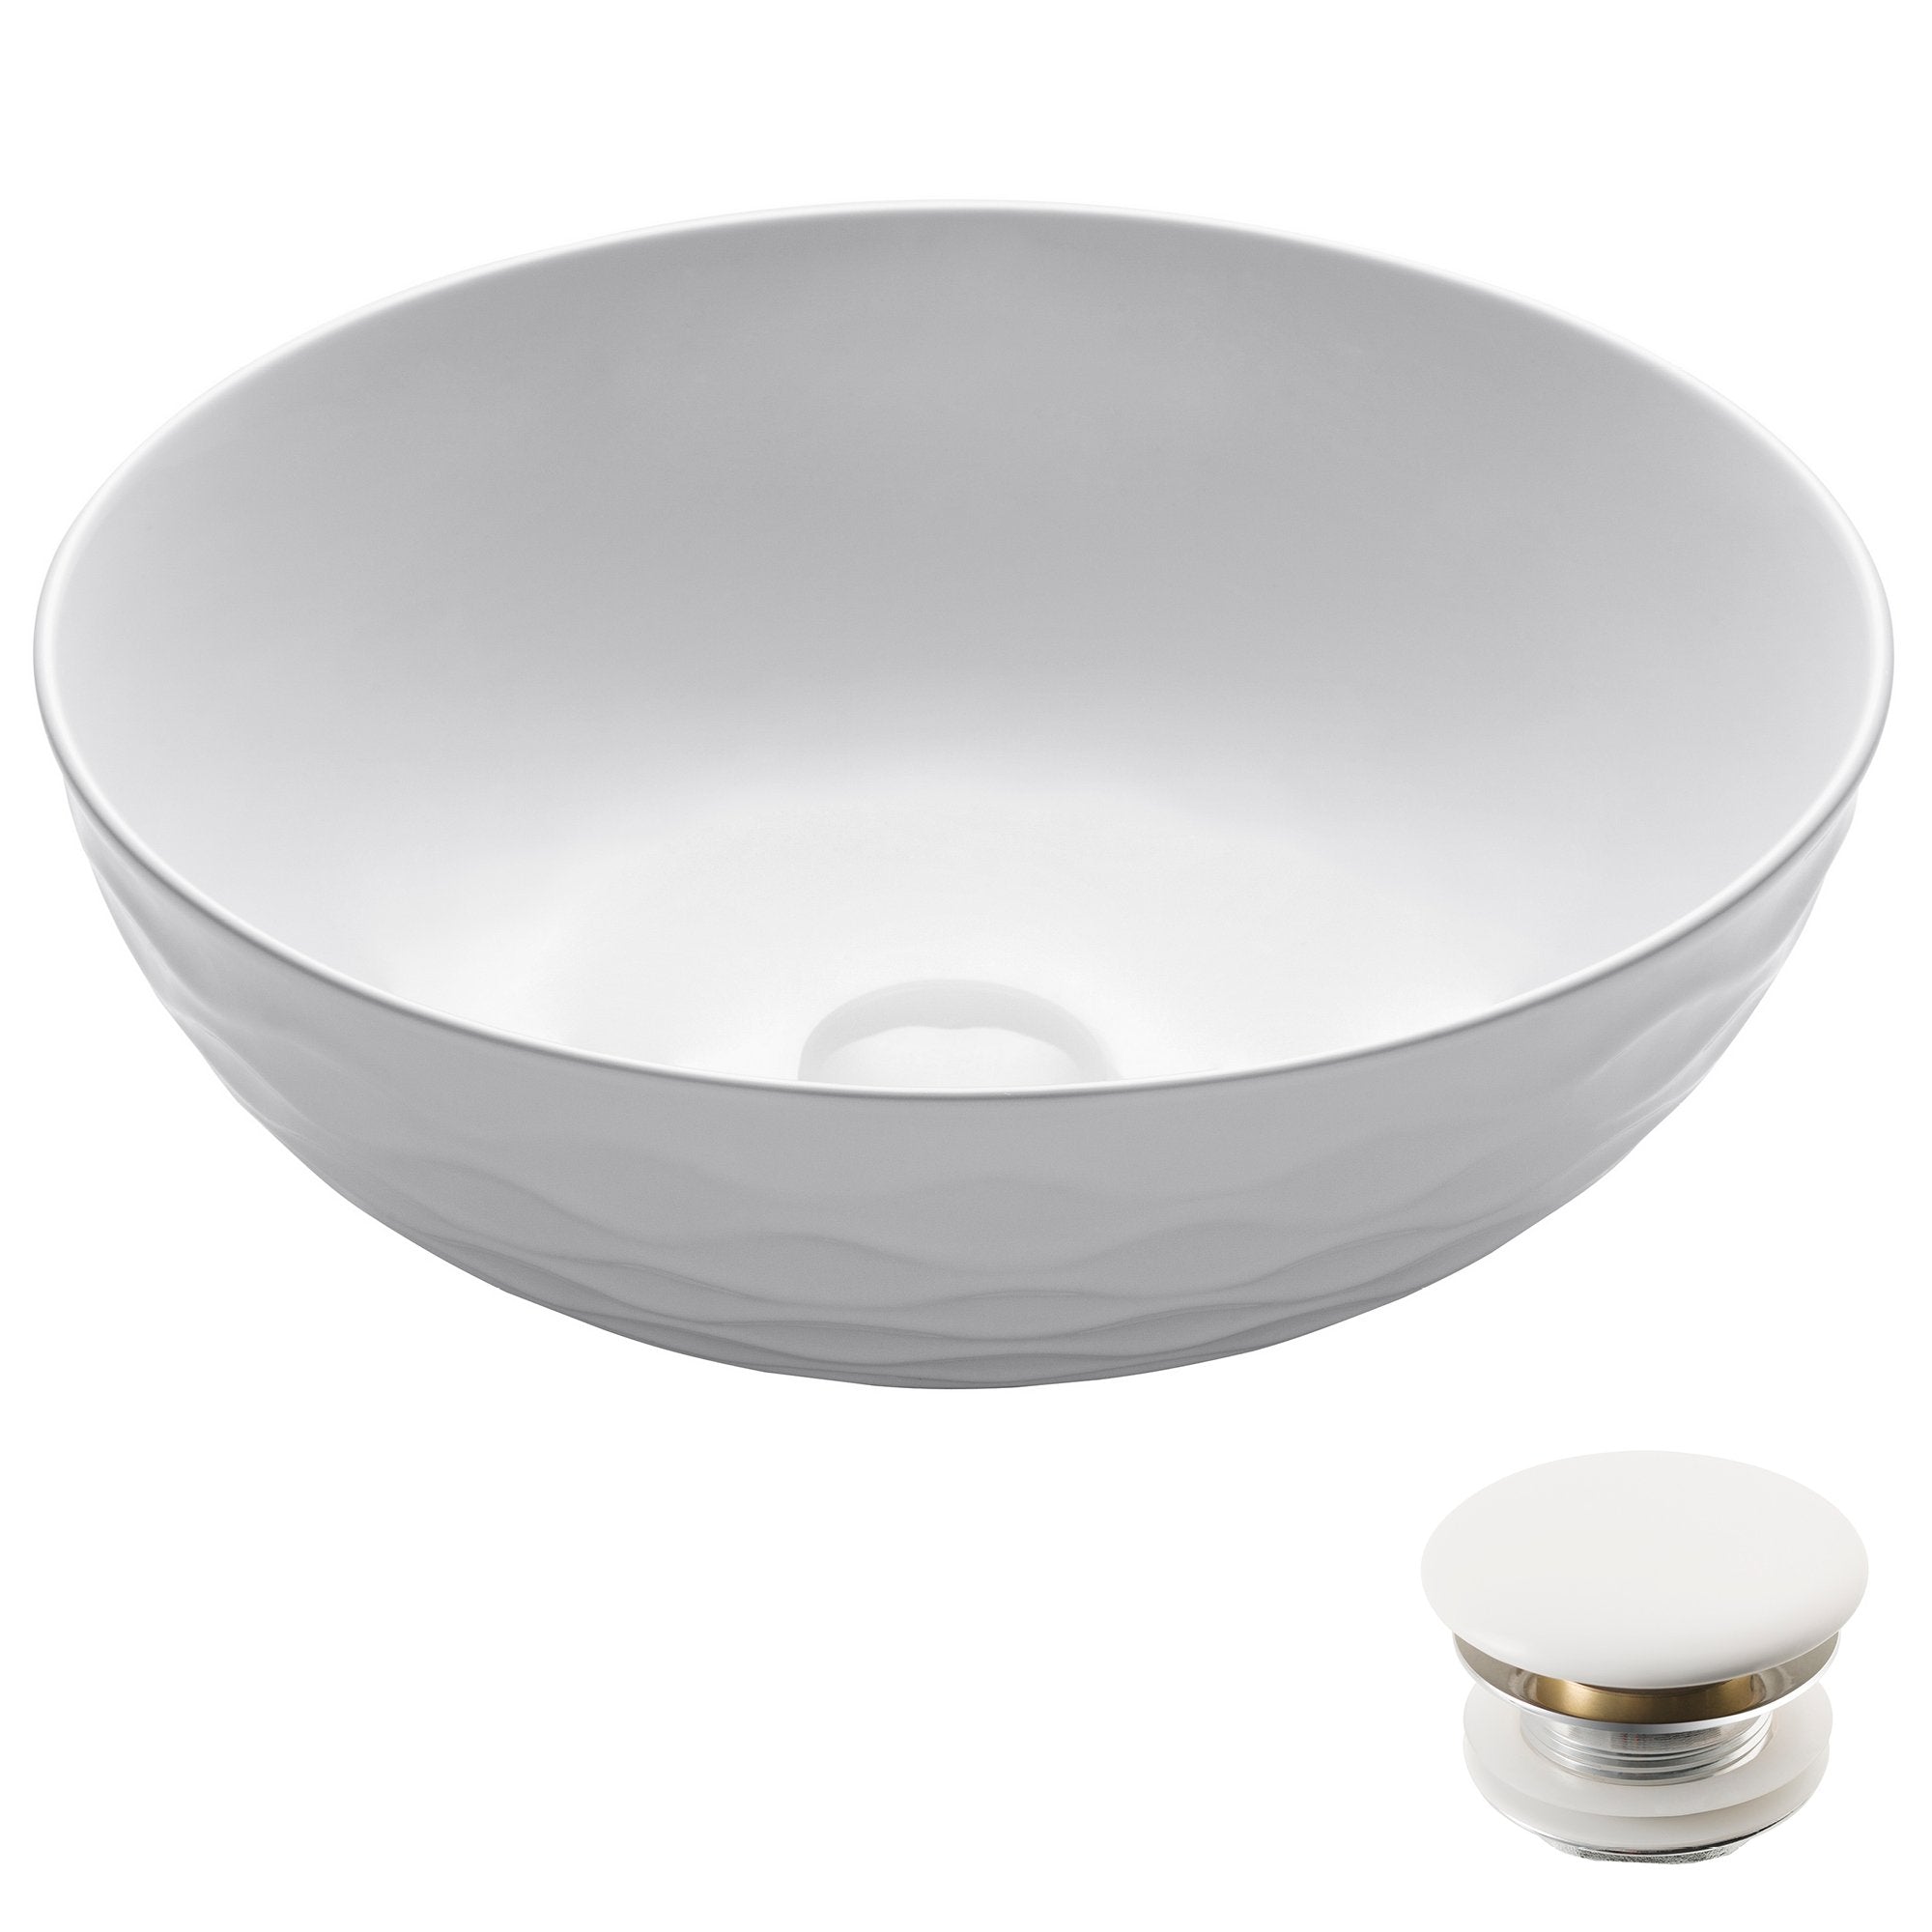 KRAUS Viva Round White Porcelain Ceramic Vessel Bathroom Sink with Pop-Up Drain, 16 1/2D x 5 1/2H-Bathroom Sinks-KRAUS Fast Shipping